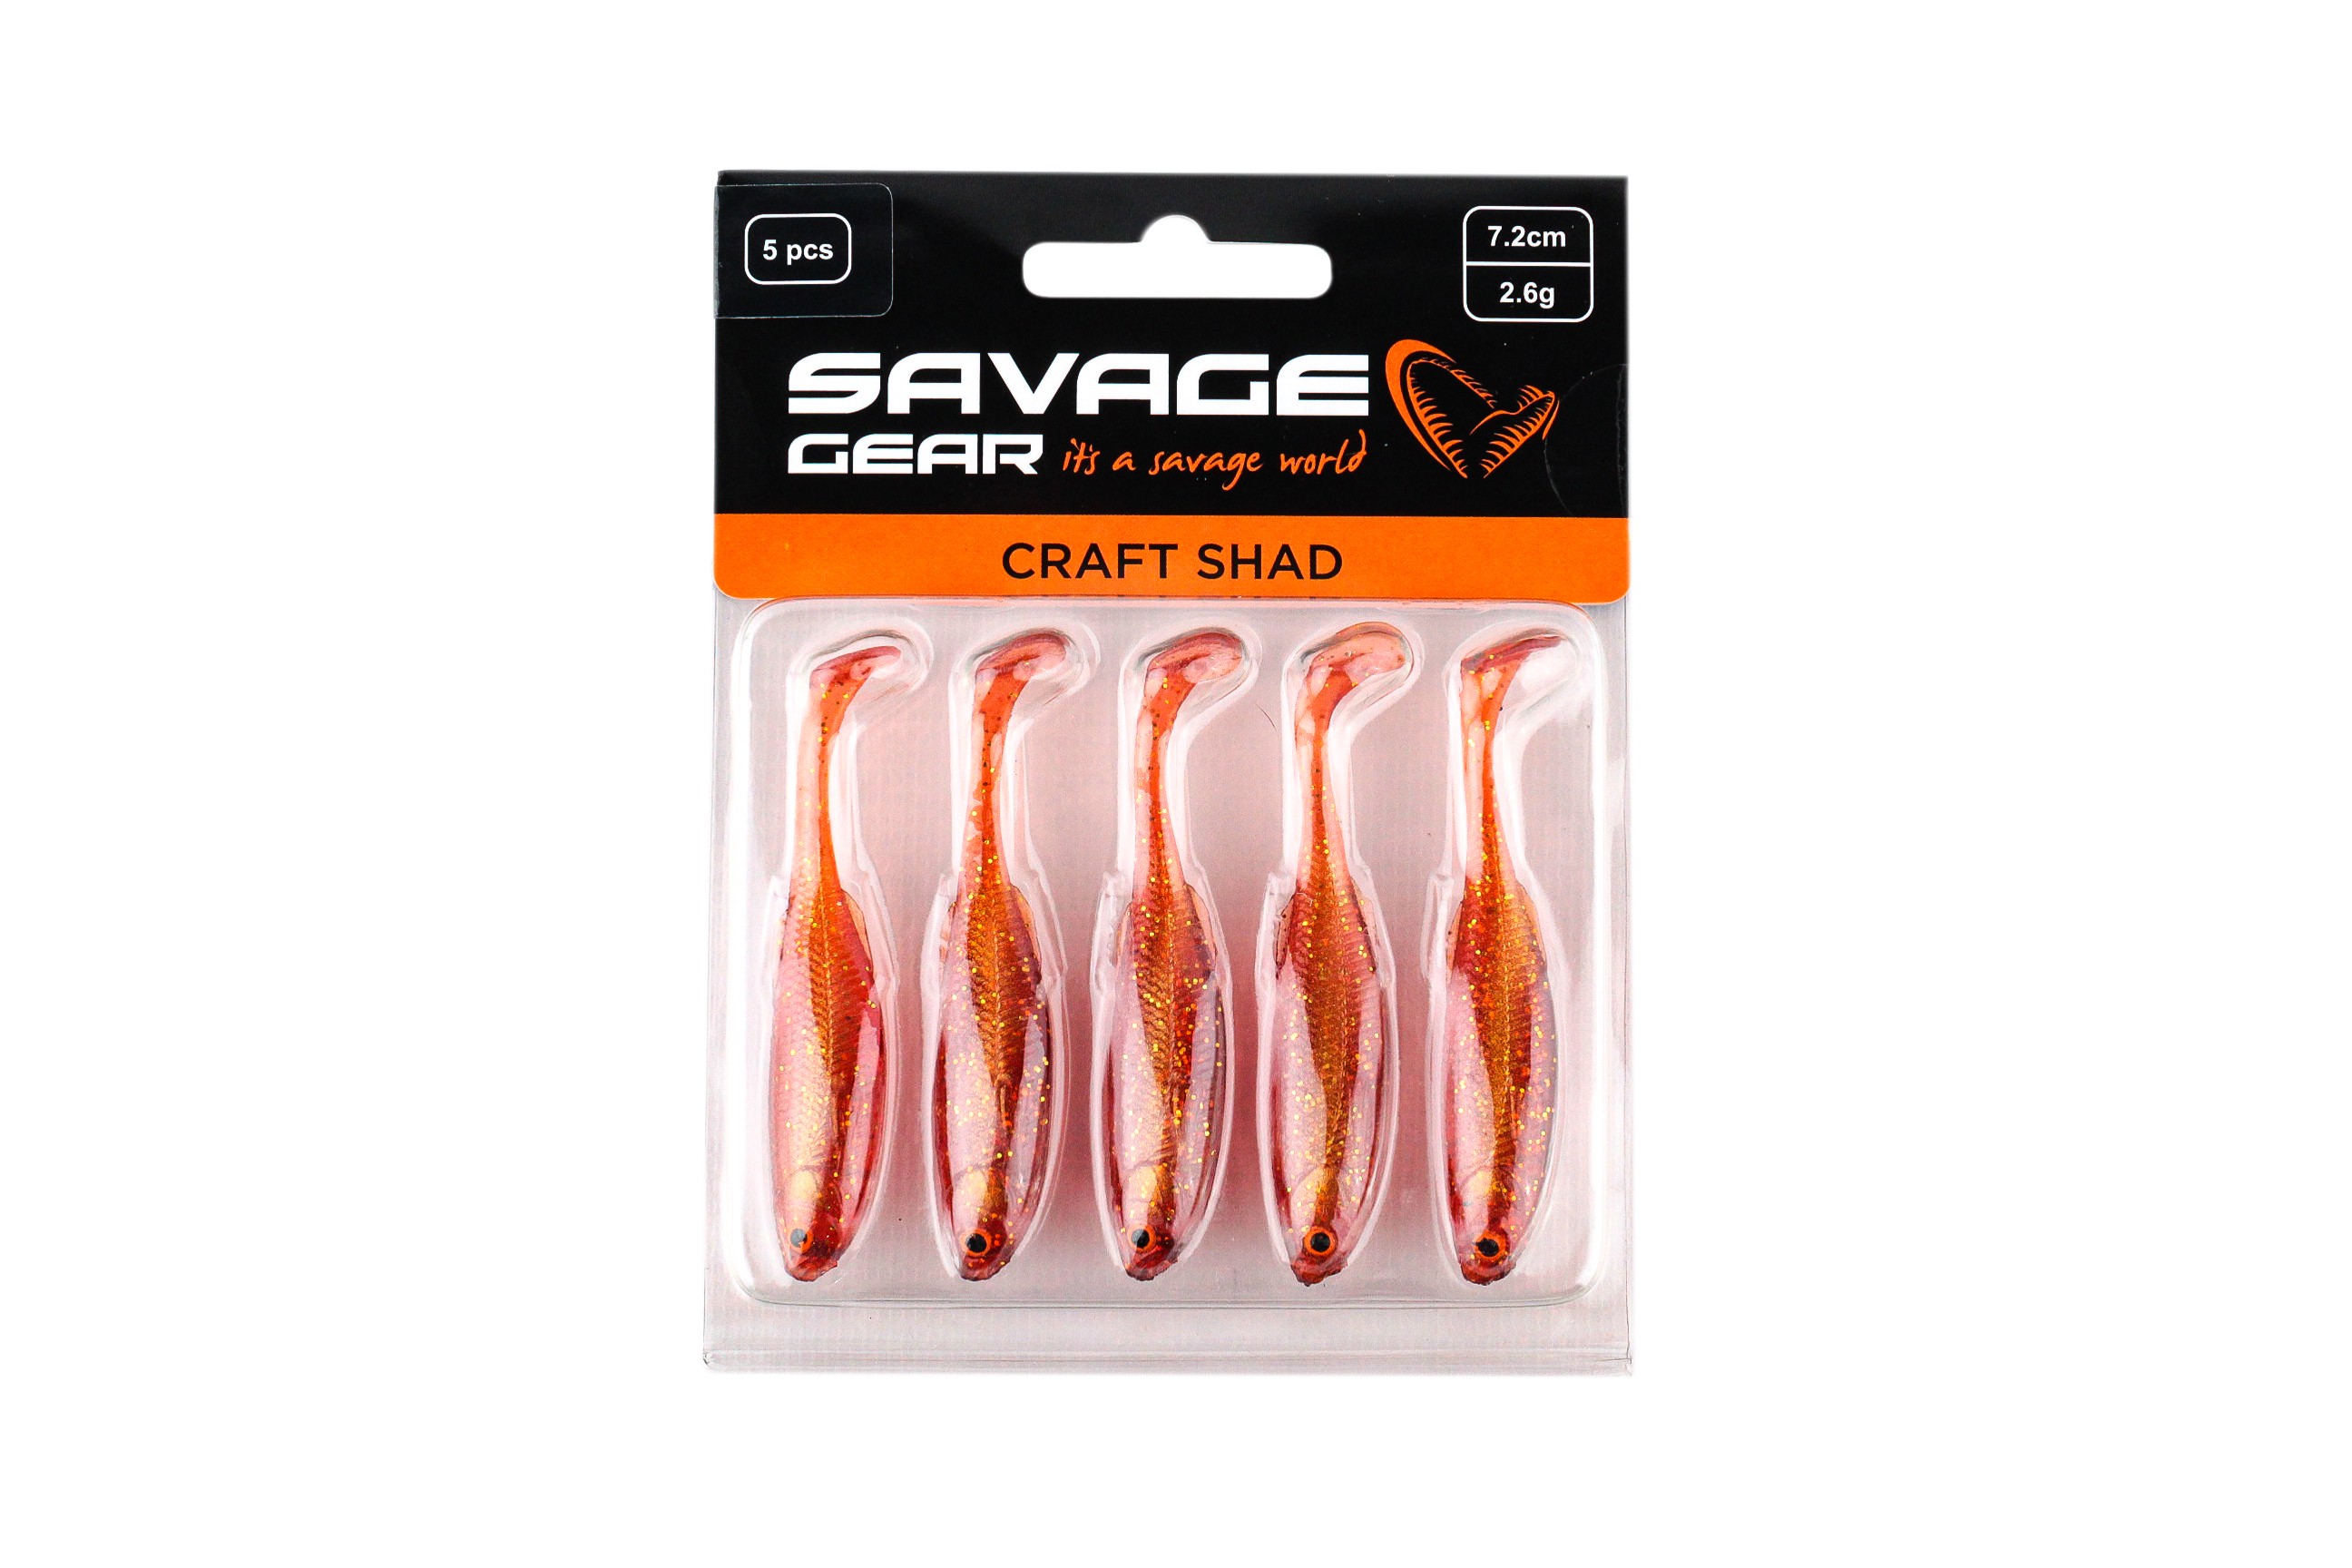 Приманка Savage Gear Craft shad 7,2см 2,6гр motor oil уп.5шт - фото 1